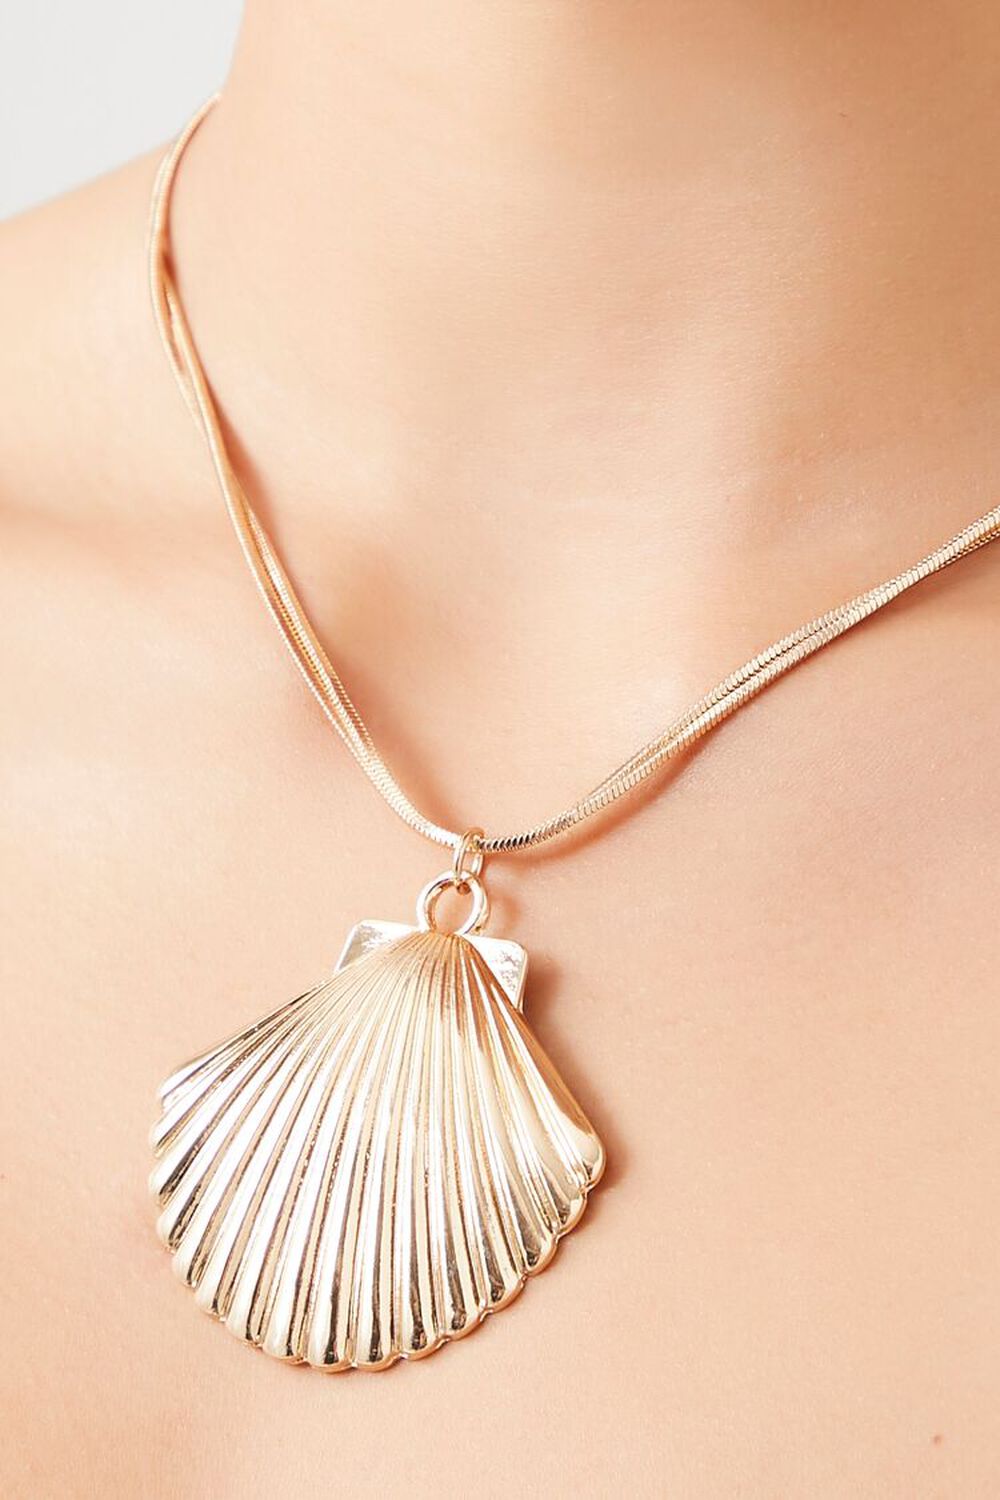 Seashell Pendant Necklace, image 2